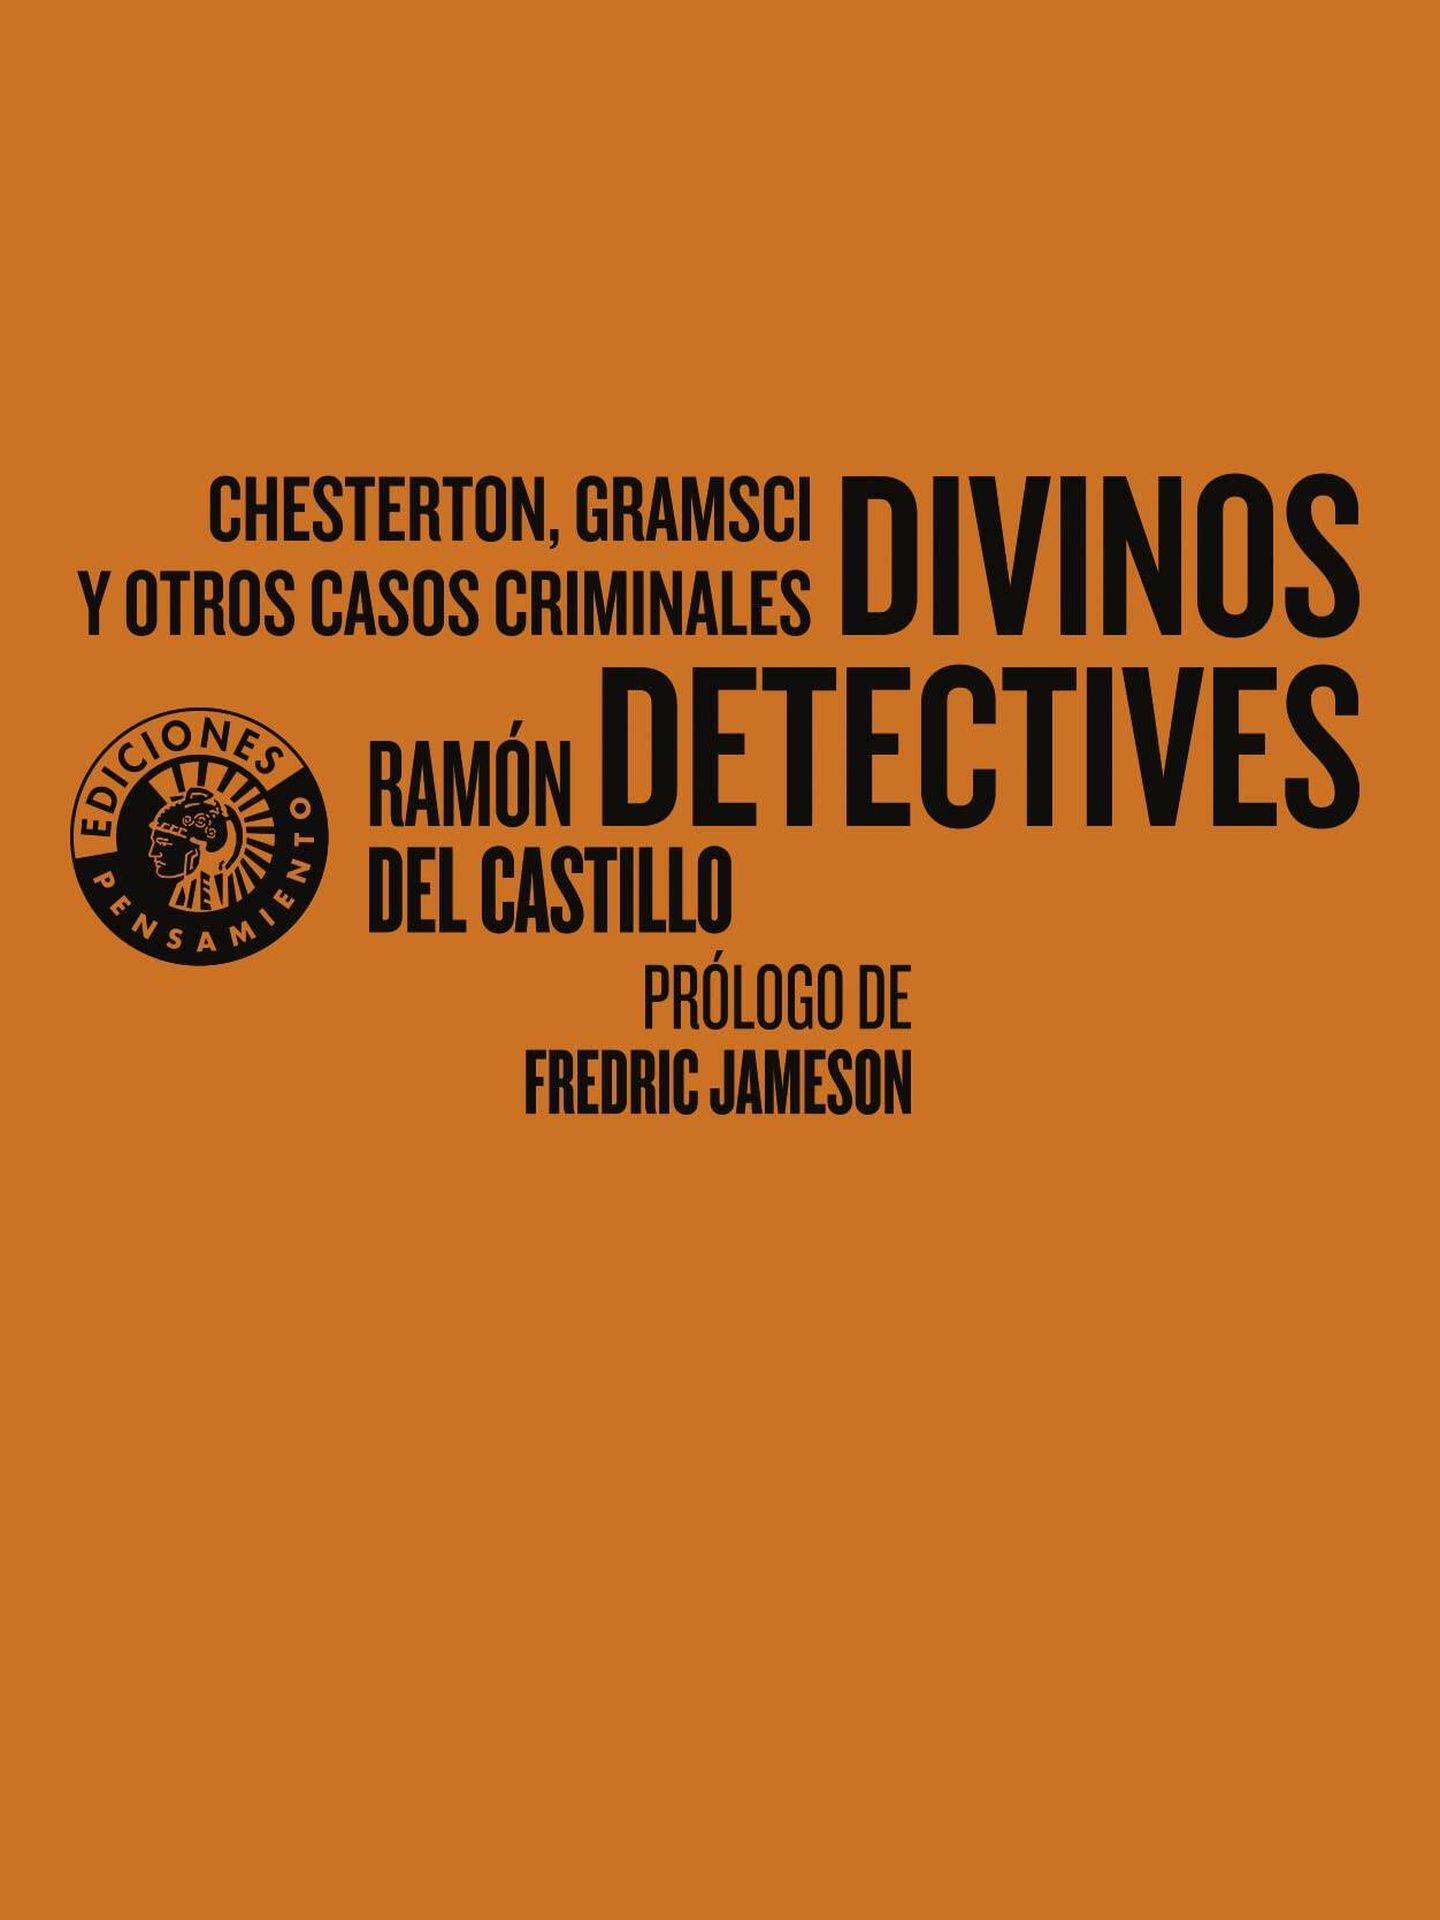 'Divinos detectives', de Ramón del Castillo (CBA)